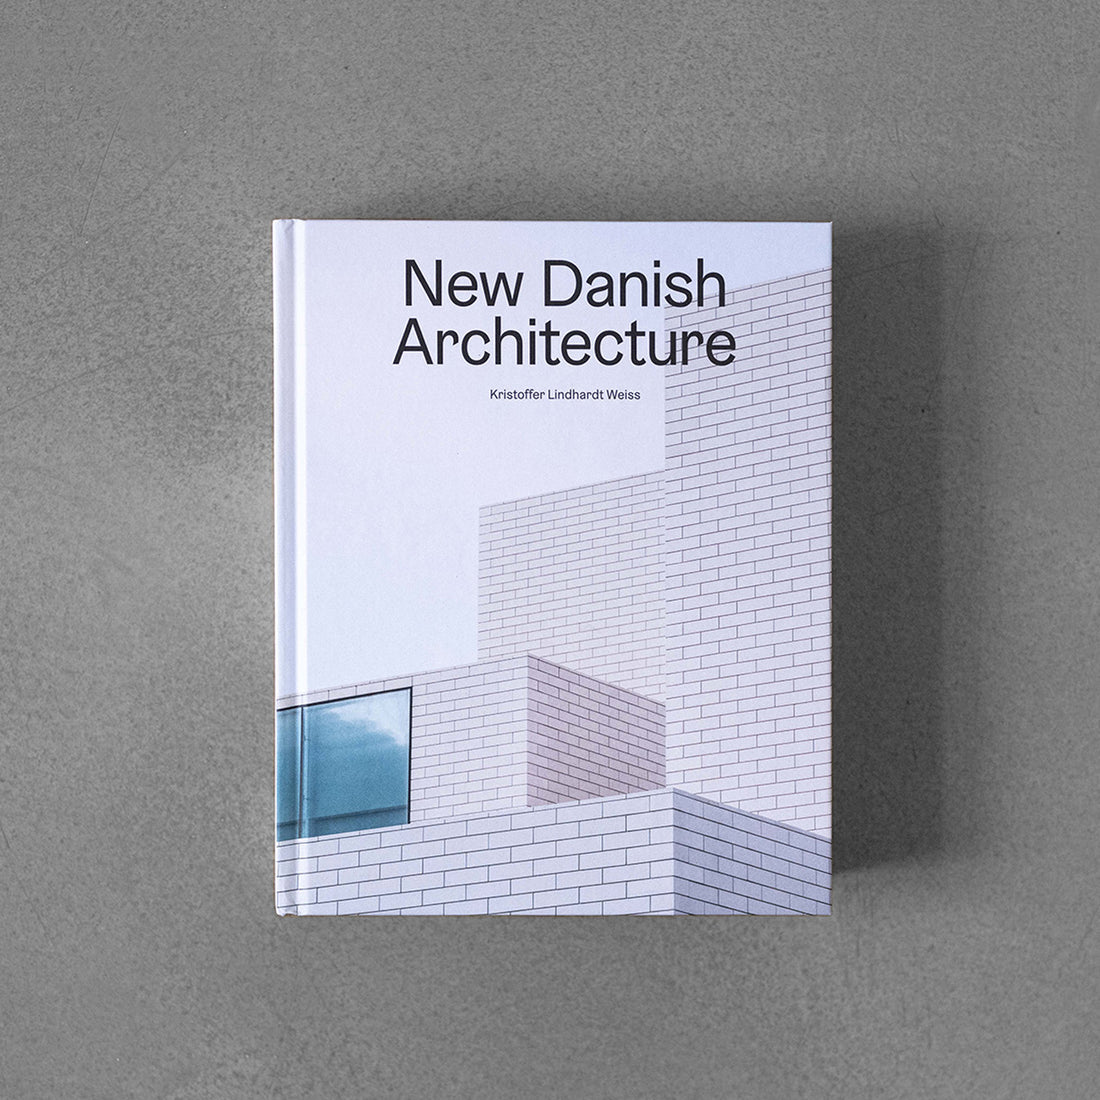 Nowa duńska architektura